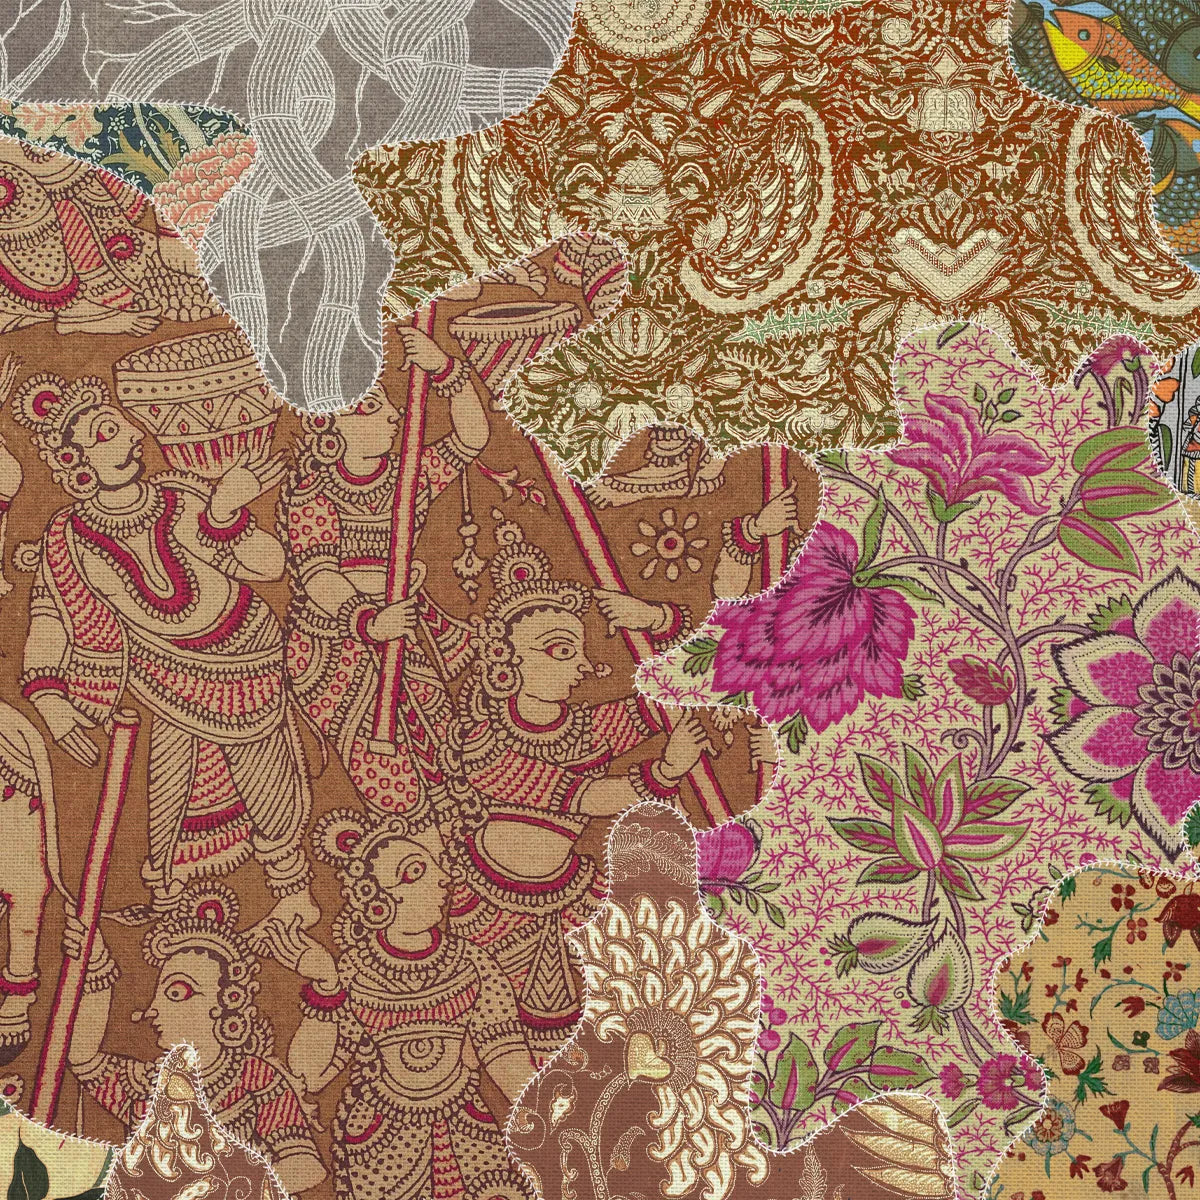 Rang Rali, Indian Wallpaper Inspired by Fabrics of India